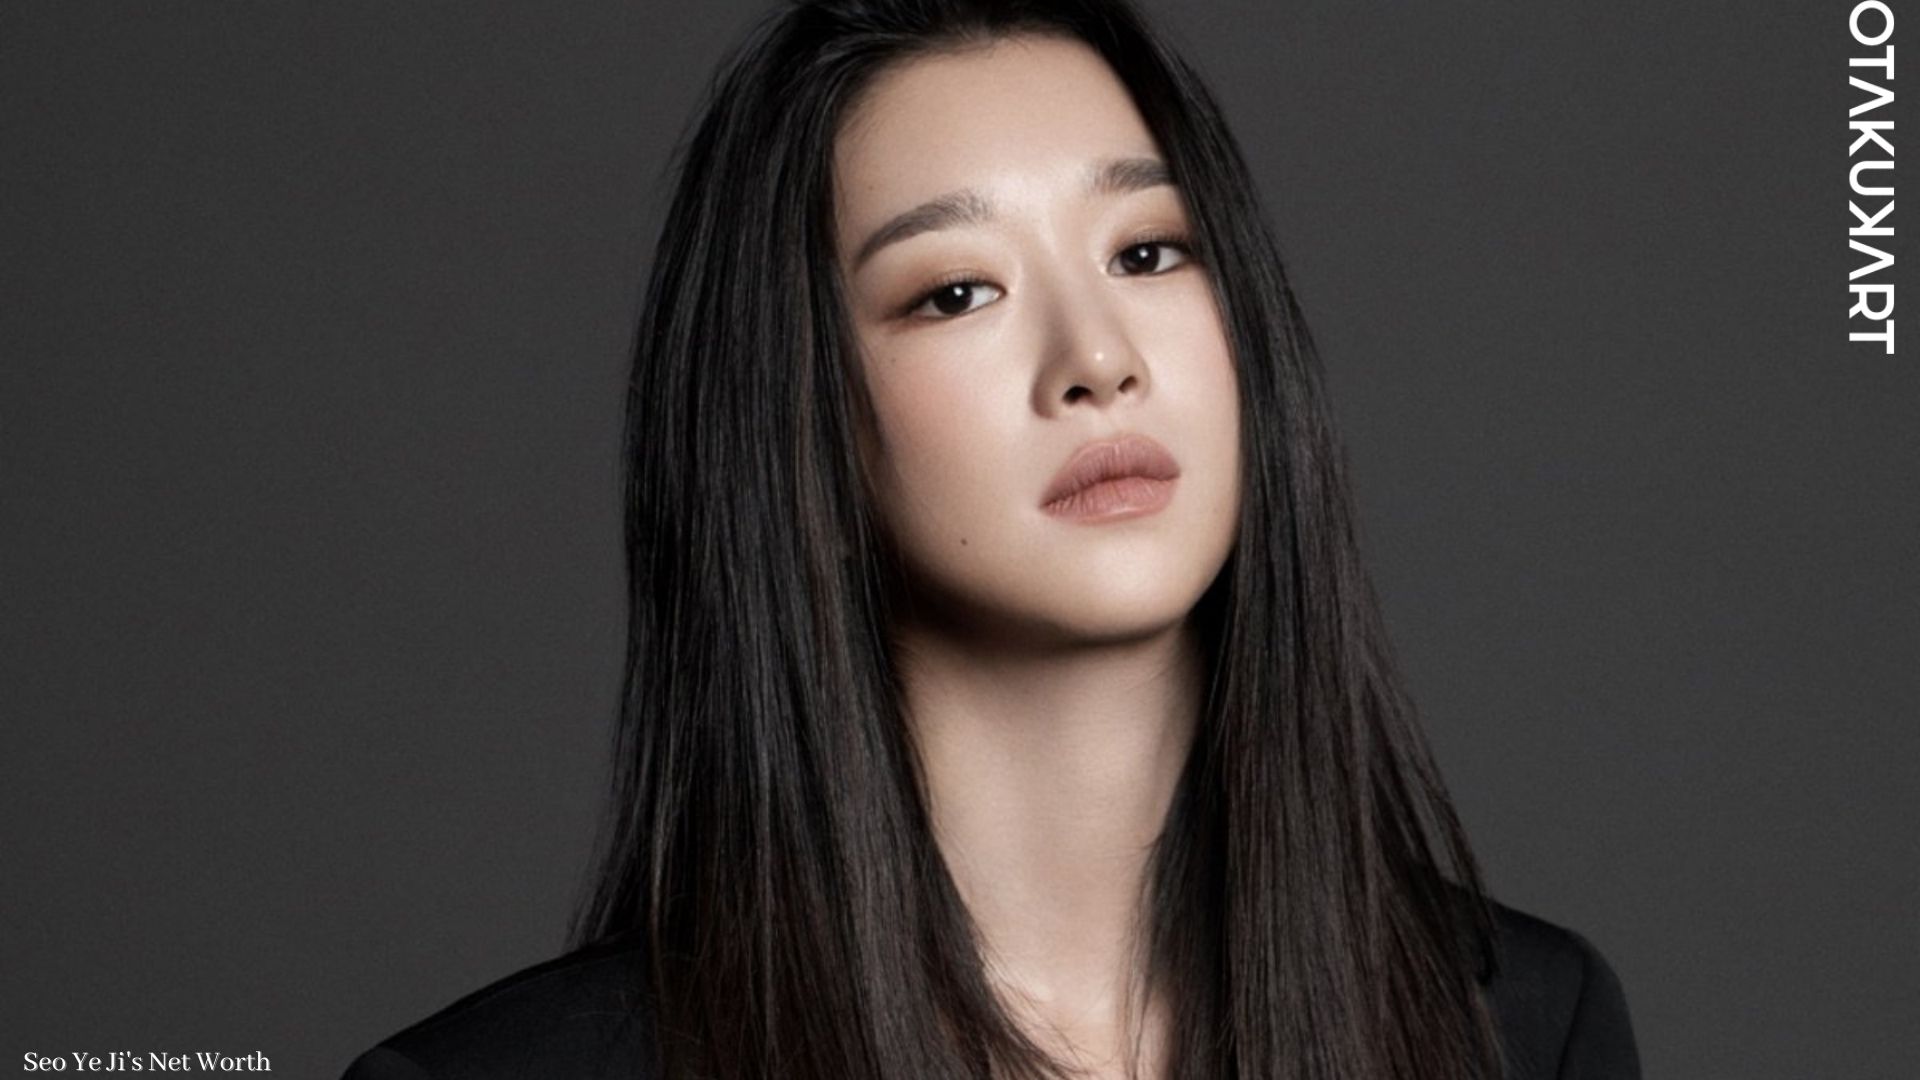 Seo Ye Ji’s Net Worth: How Rich Is the ‘It’s Okay To Not Be Okay’ Actress?